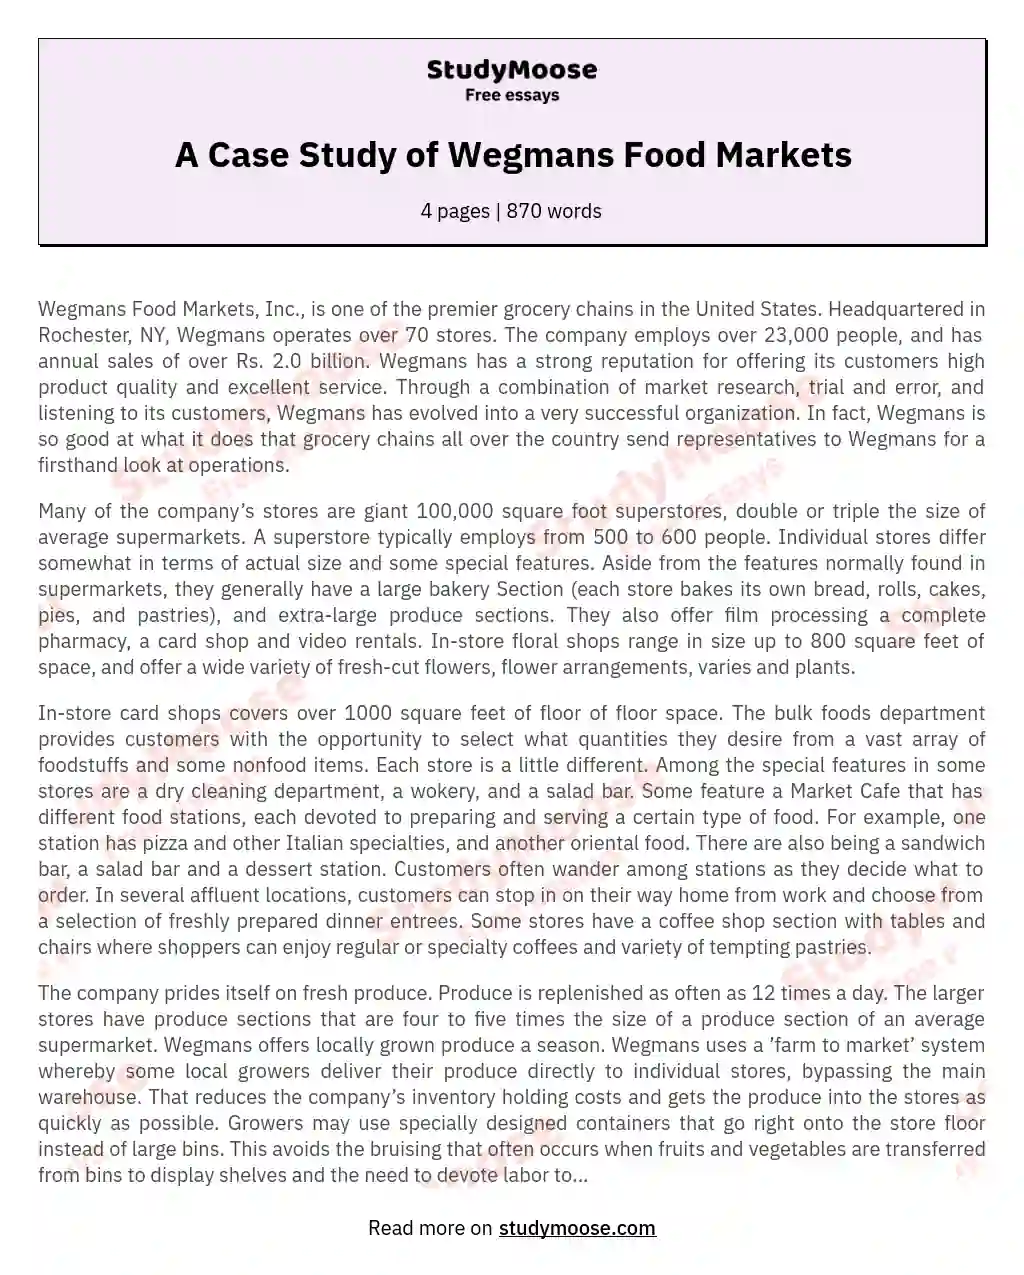 A Case Study of Wegmans Food Markets essay